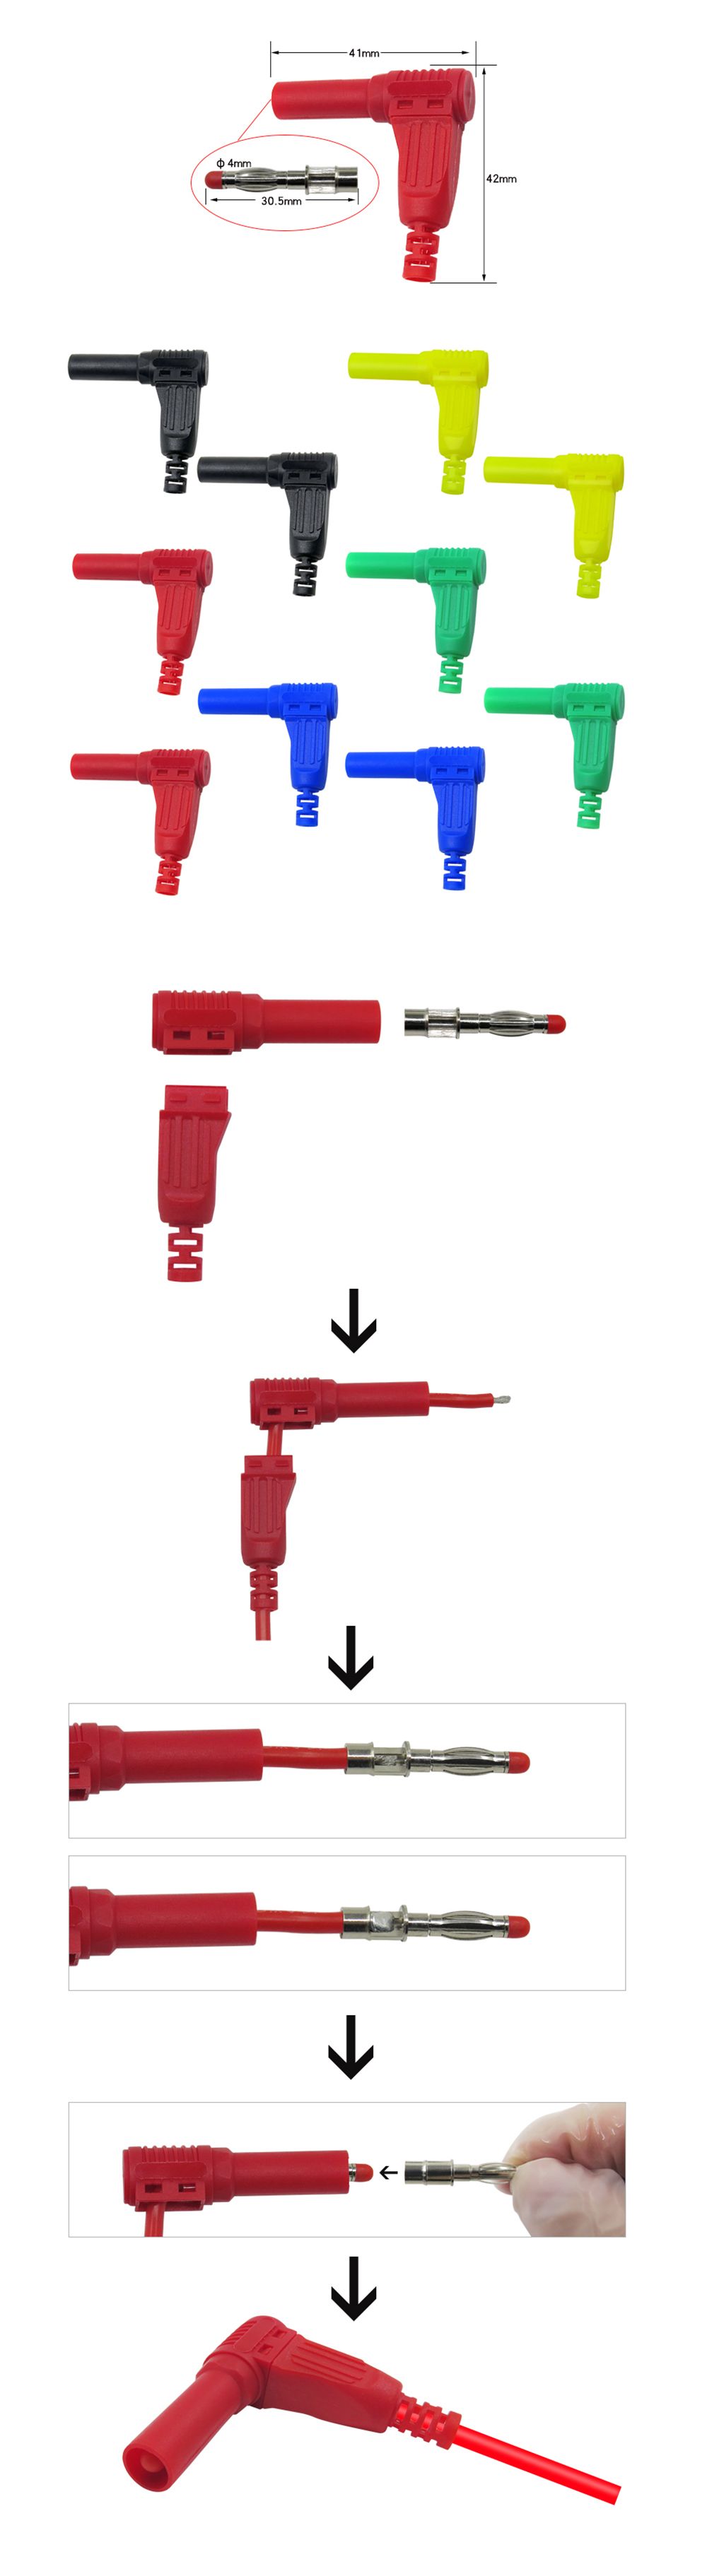 P3014-10pcs-4mm-Safety-Shrouded-Banana-Plug-90-Degree-Right-Angle-Plug-Self-assembly-DIY-Connectors-1423530